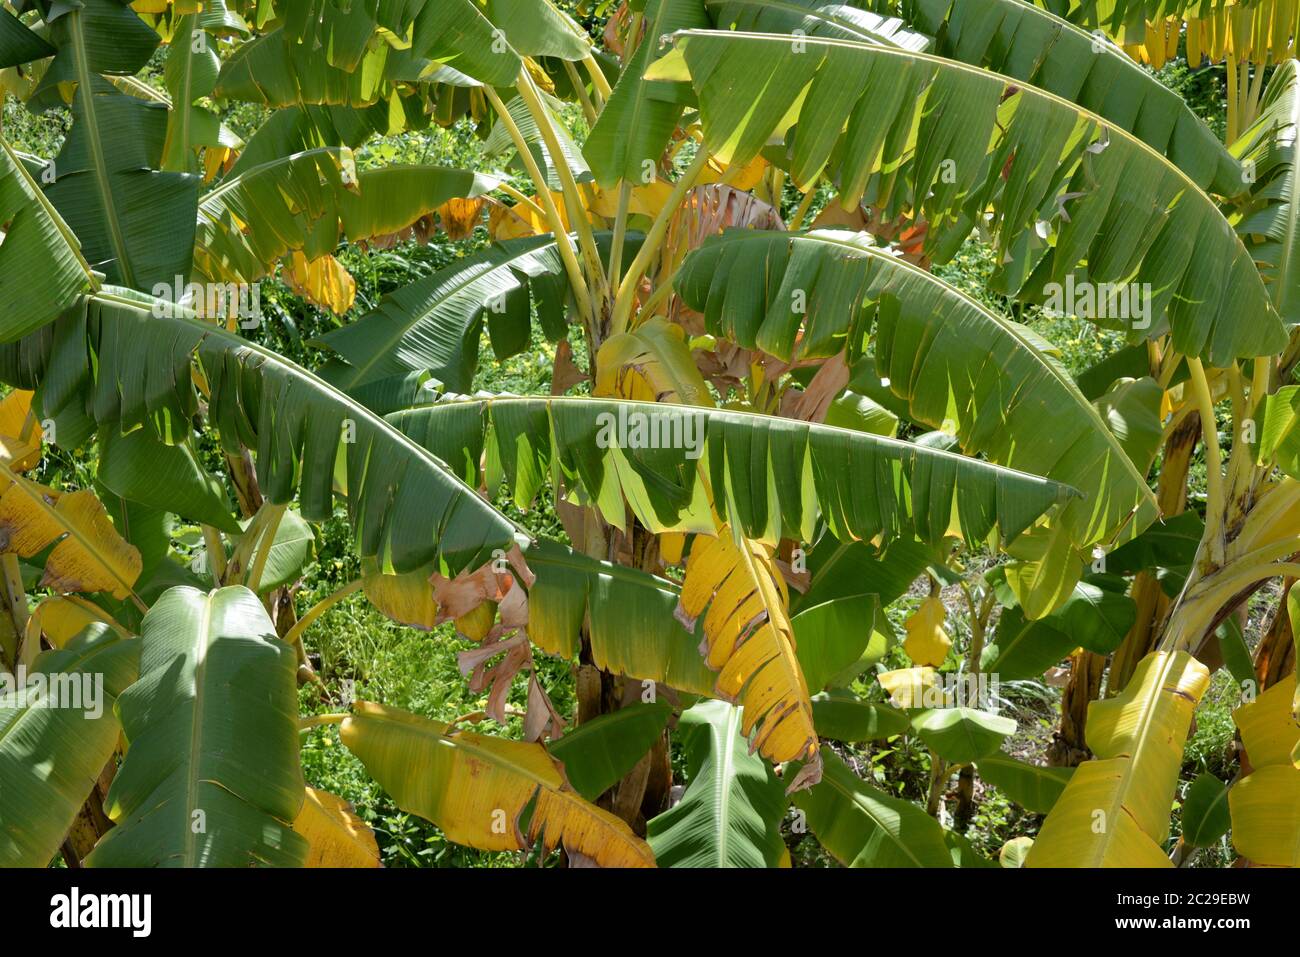 Banana tree in Spain Stock Photo